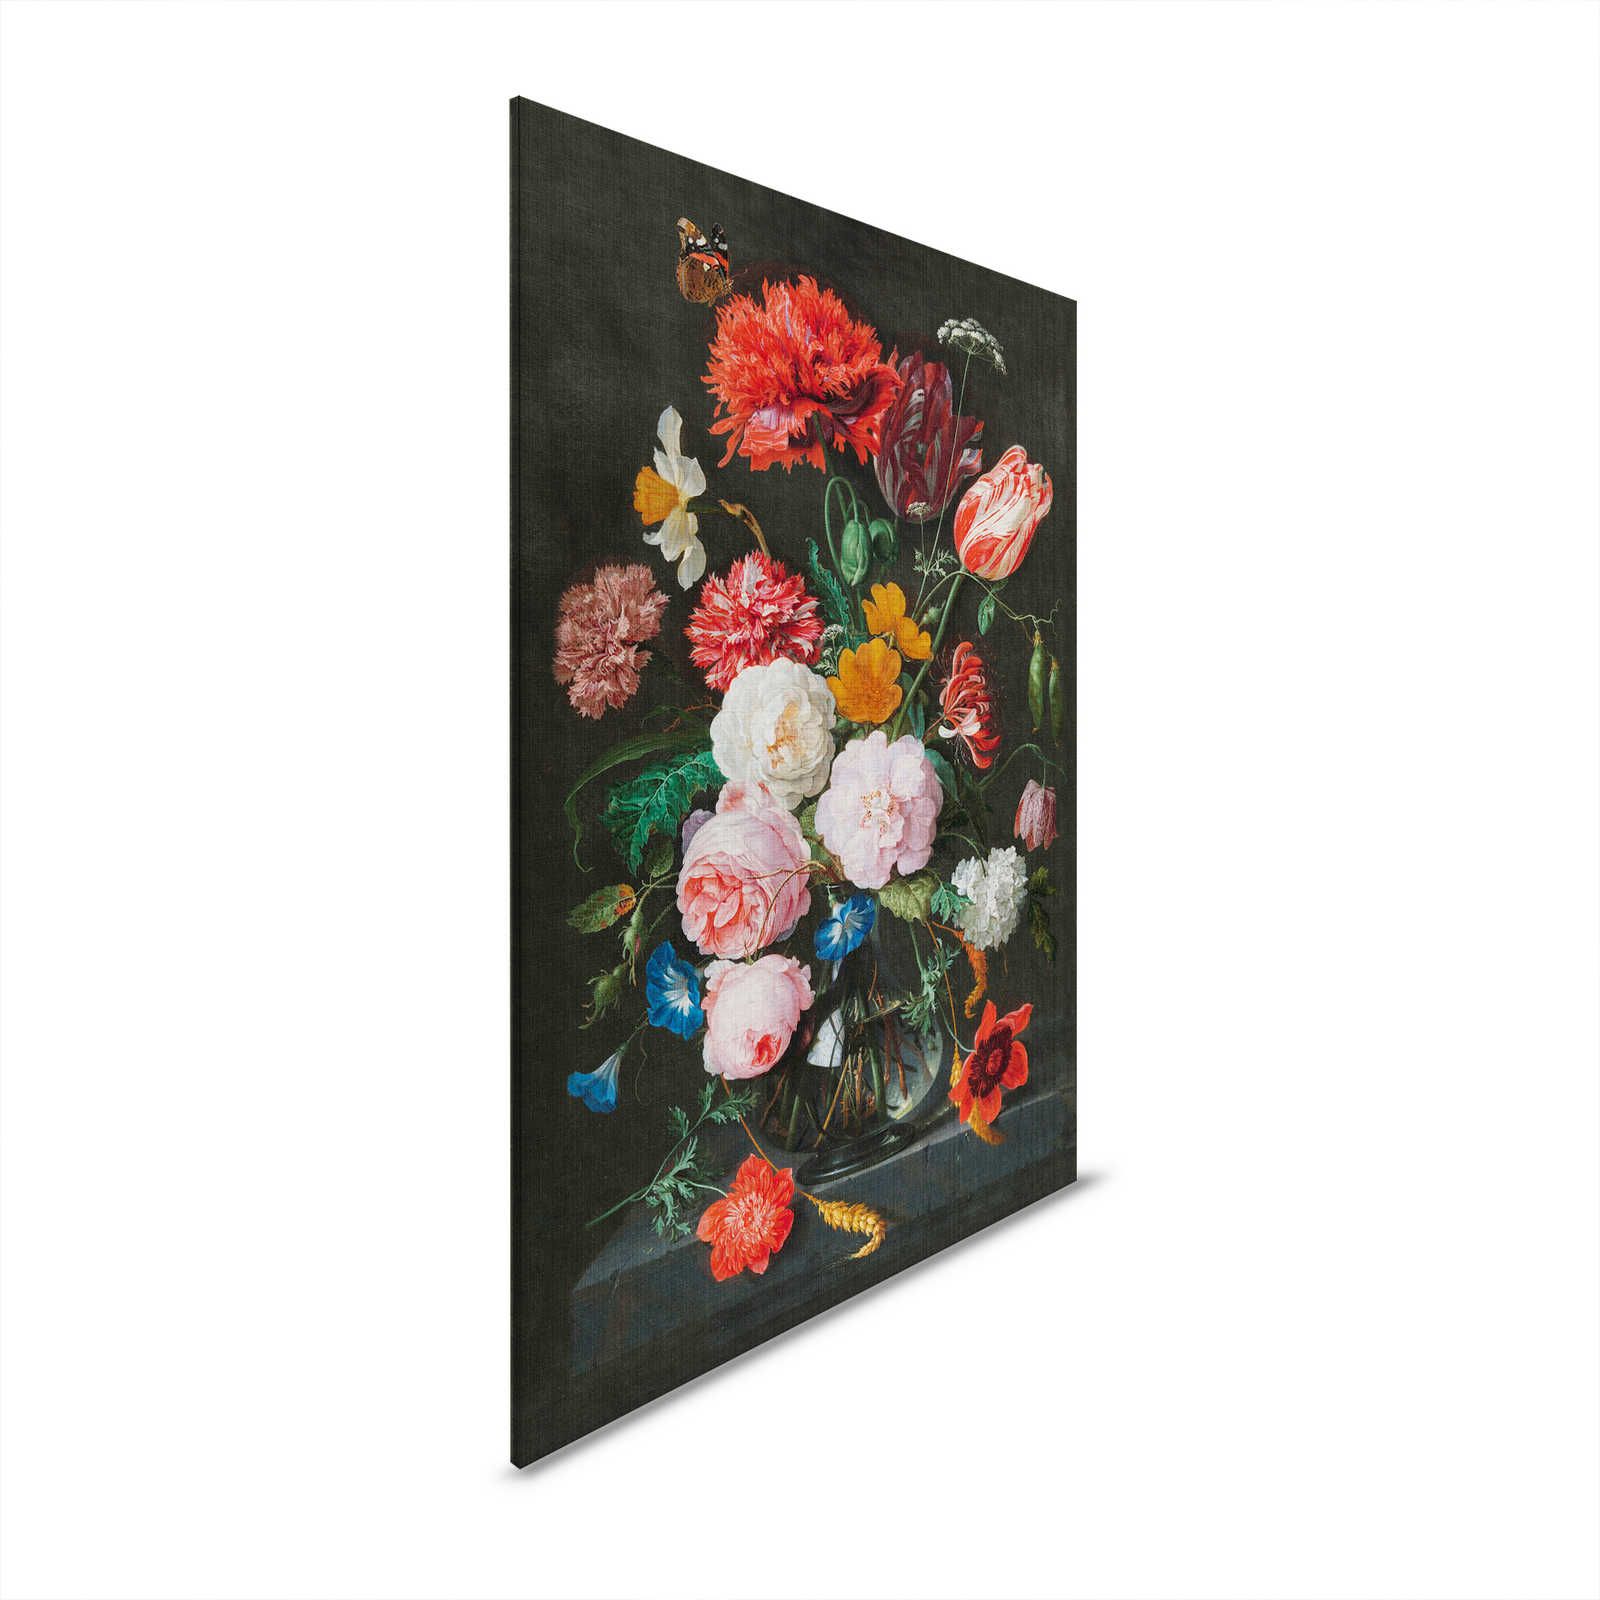 Artists Studio 4 - Toile Fleurs Naturel morte avec roses - 0,80 m x 1,20 m
